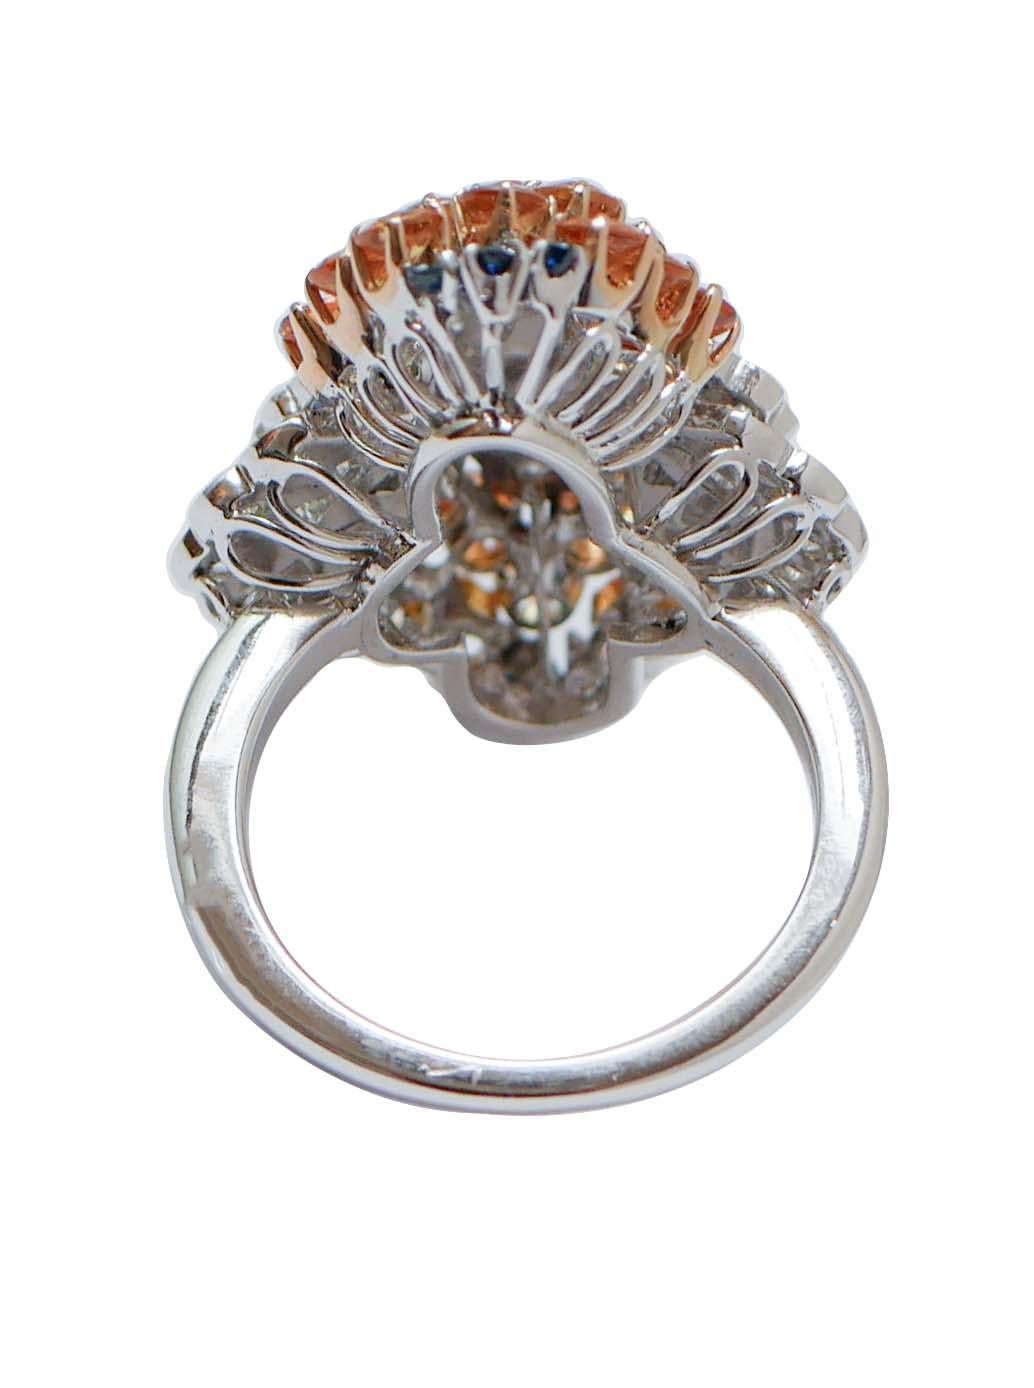 Retro Coral, Sapphires, Topazs, Diamonds, 14 Karat White Gold Ring. For Sale